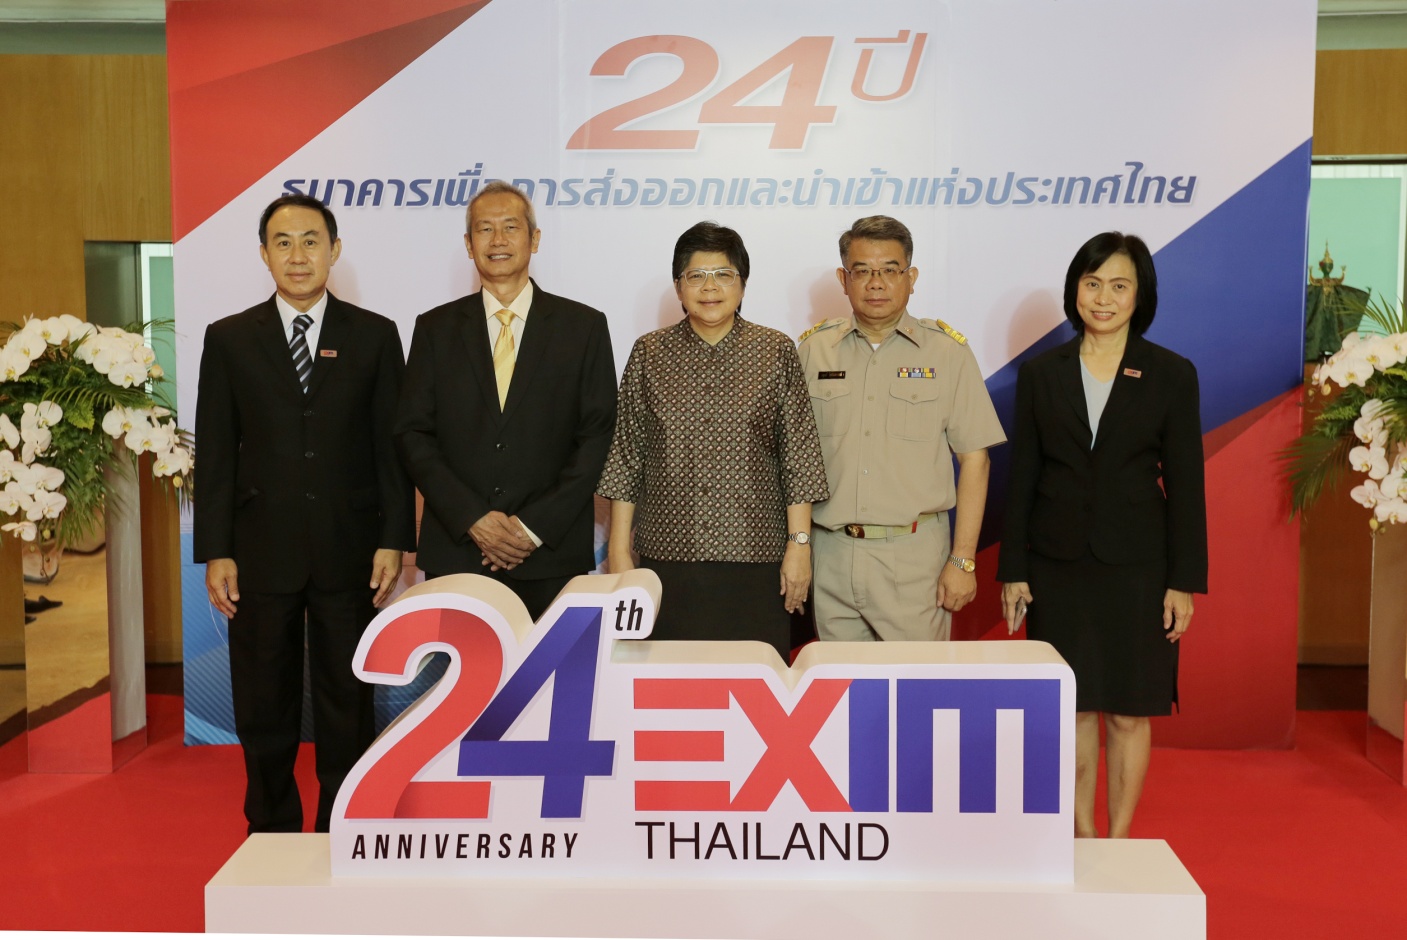 EXIM Thailand Celebrates 24th Anniversary with Public and Private Sectors Inviting Donation to Ramathibodi Foundation and Chakri Naruebodindra Medical Institute